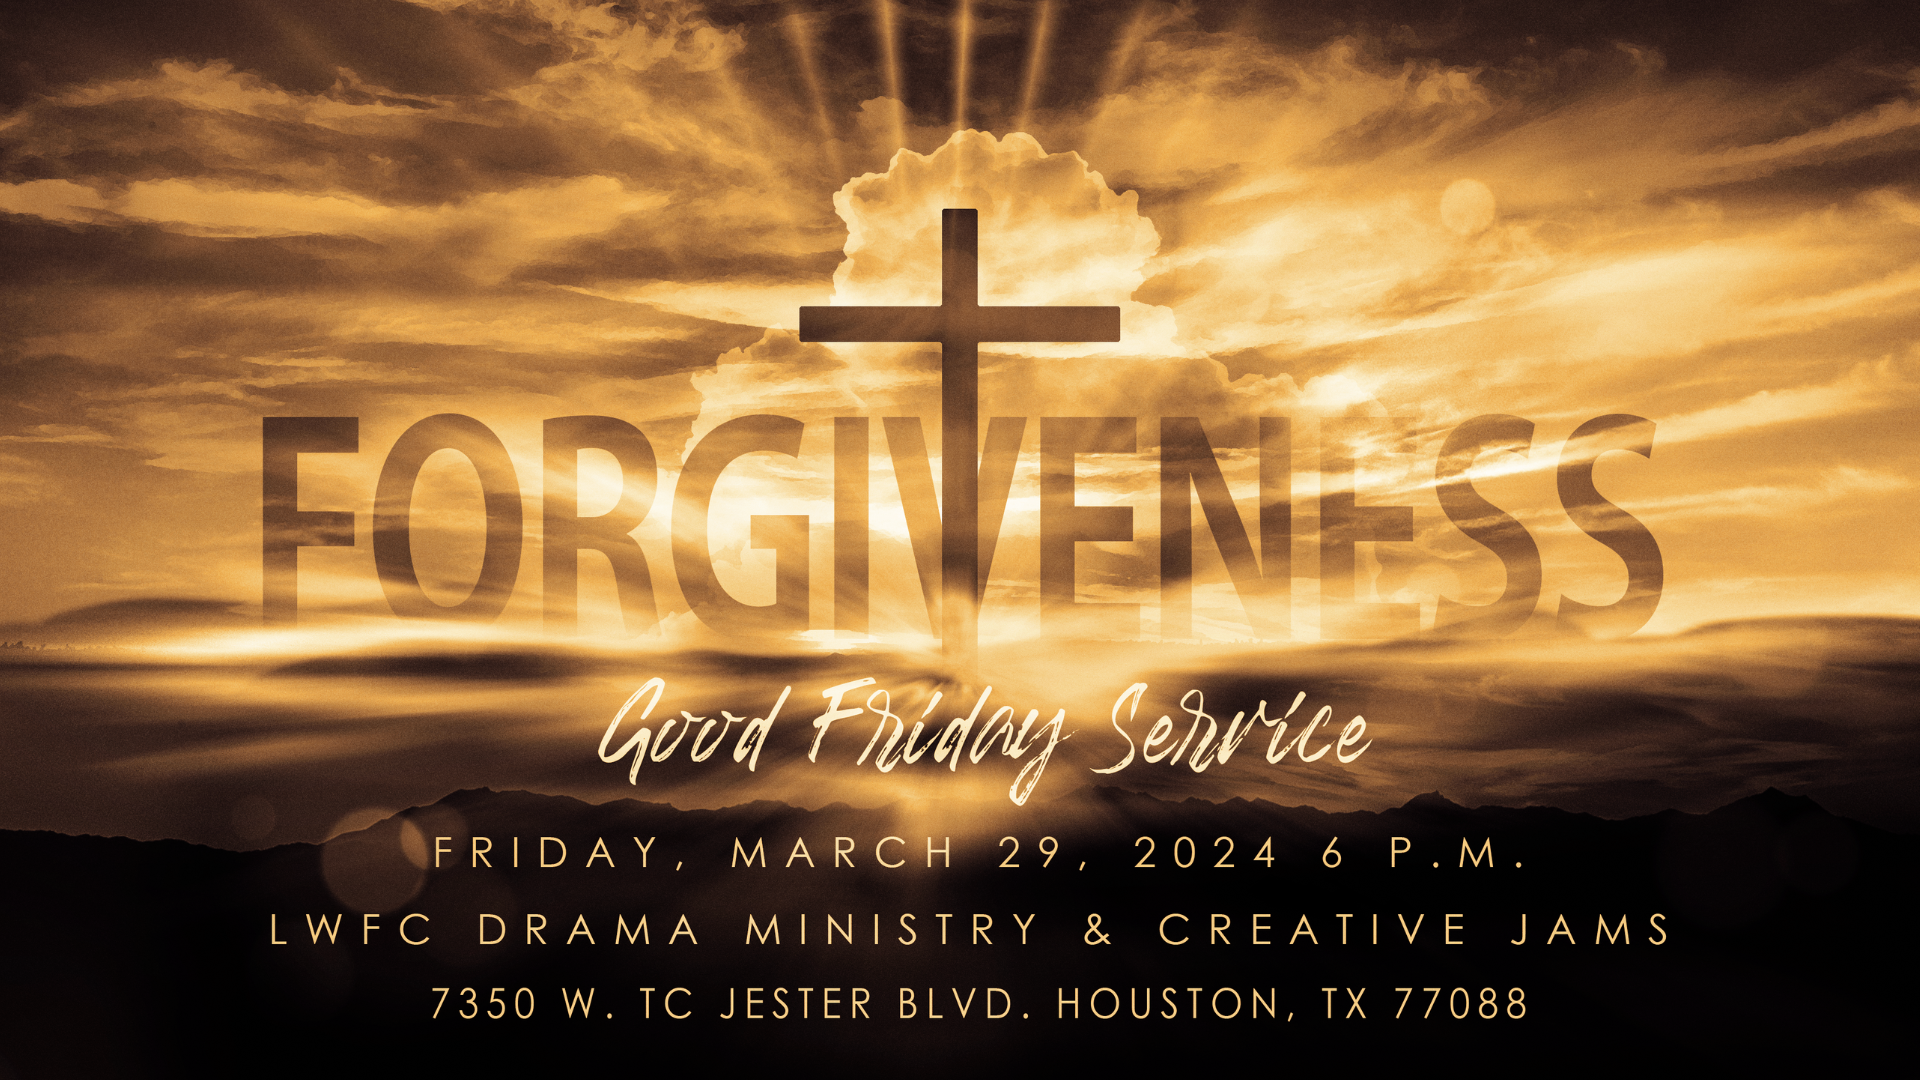 Good Friday Service – Forgiveness head image